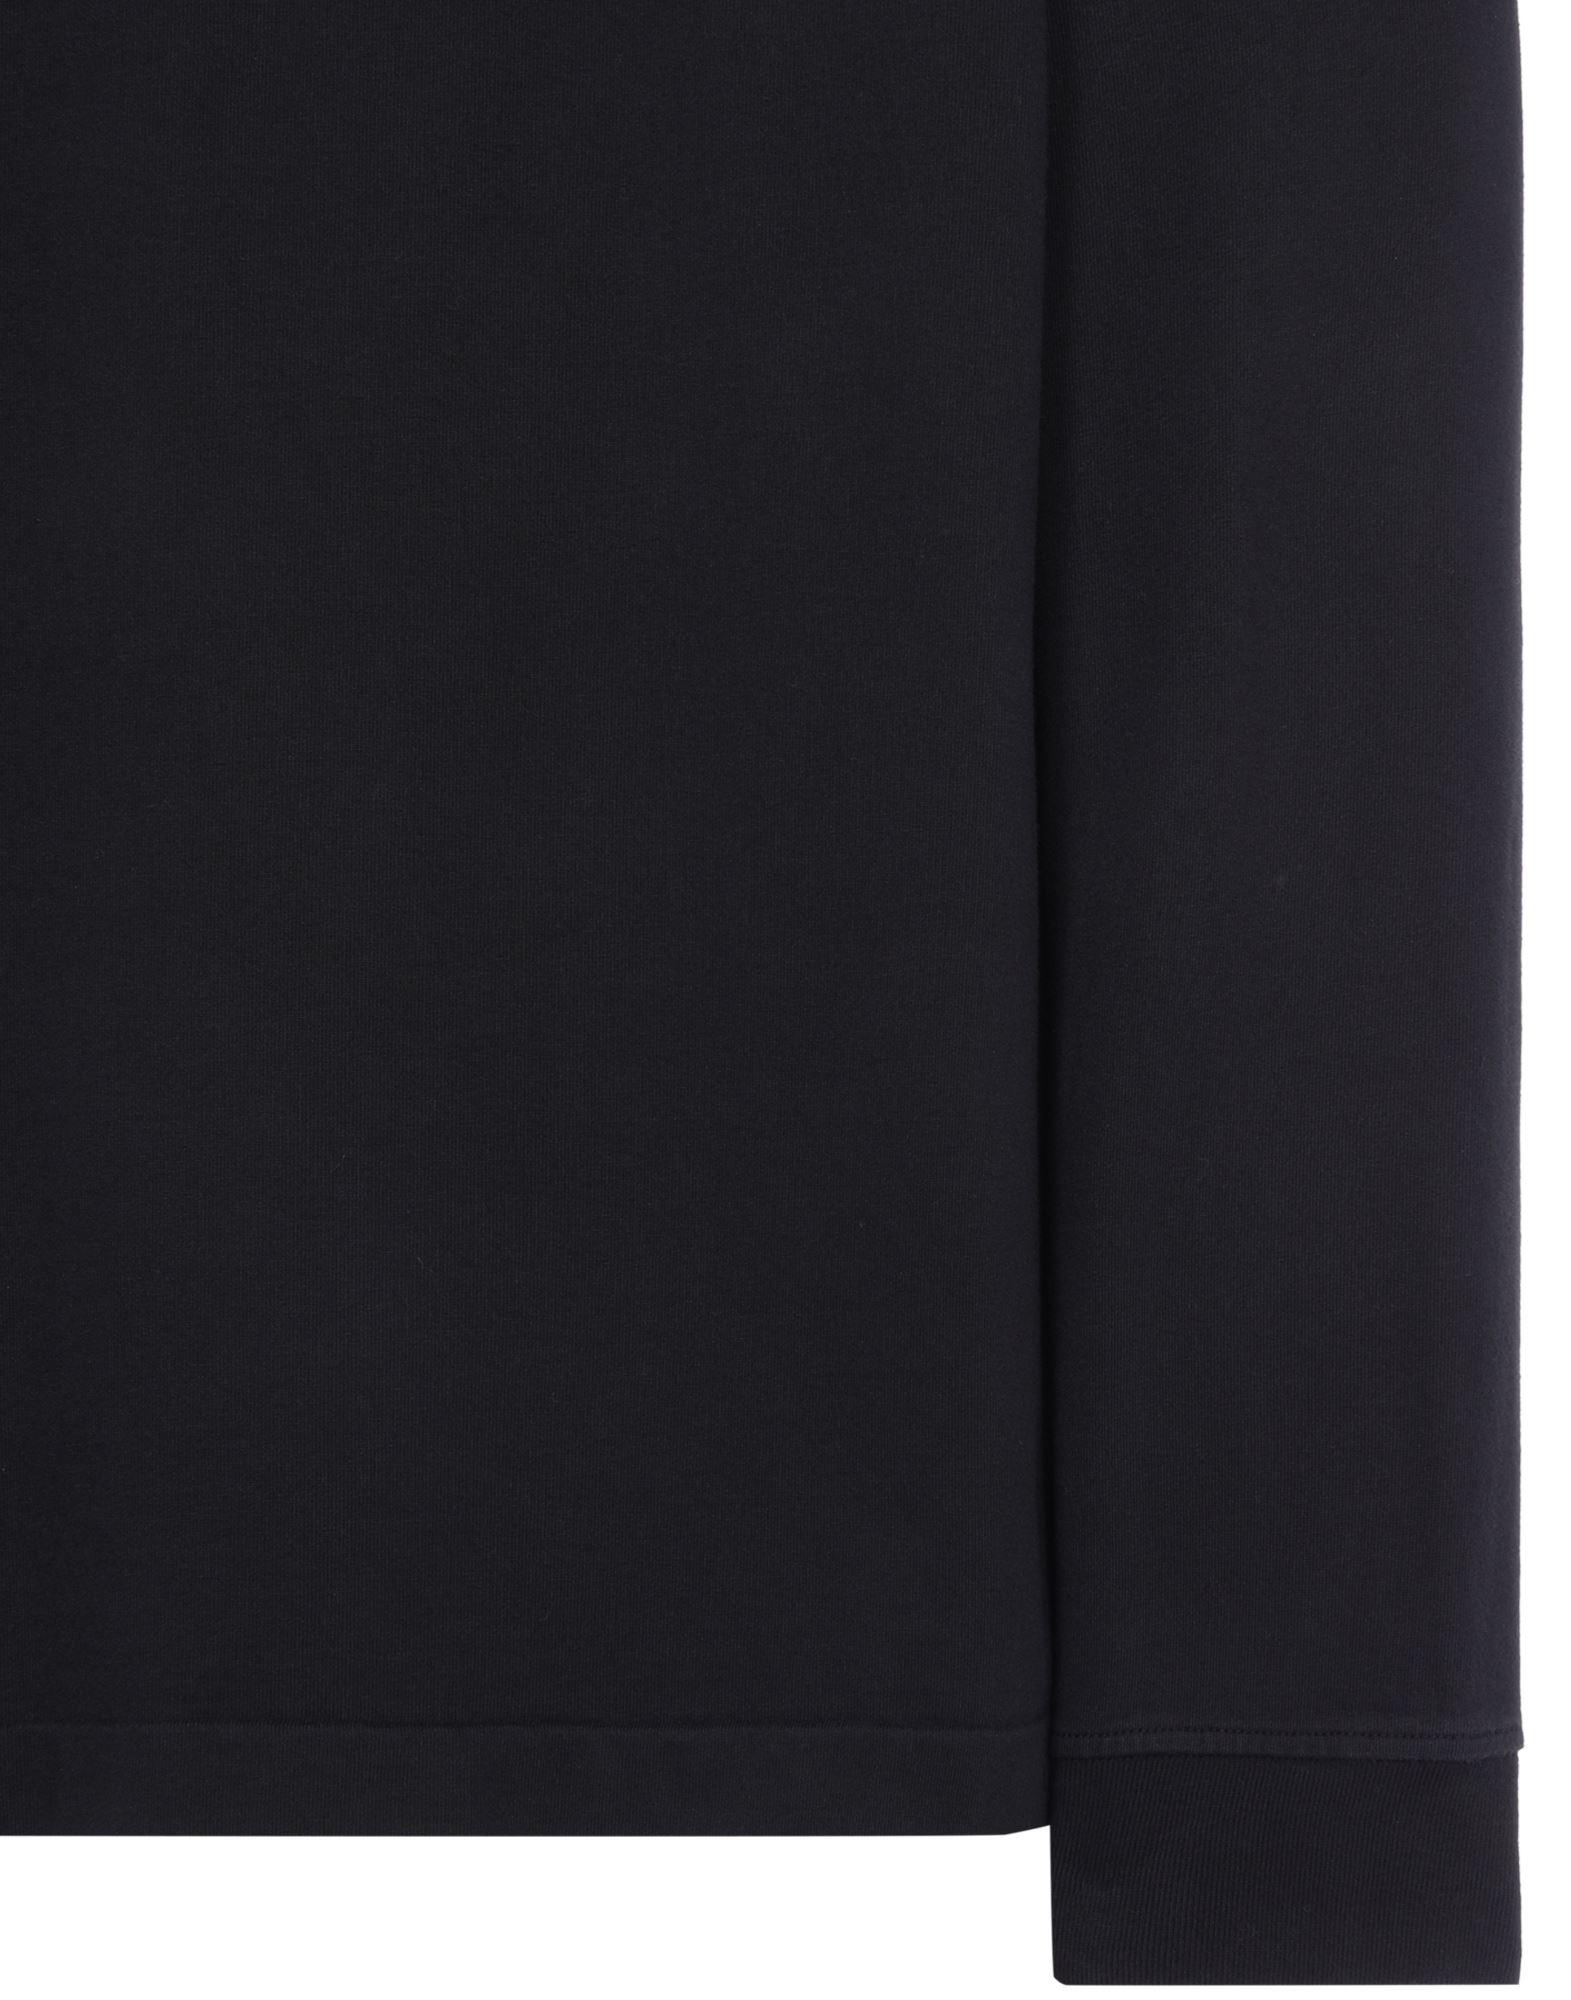 Stone Island 64450 Gauzed Cotton Jersey in Black for Men | Lyst